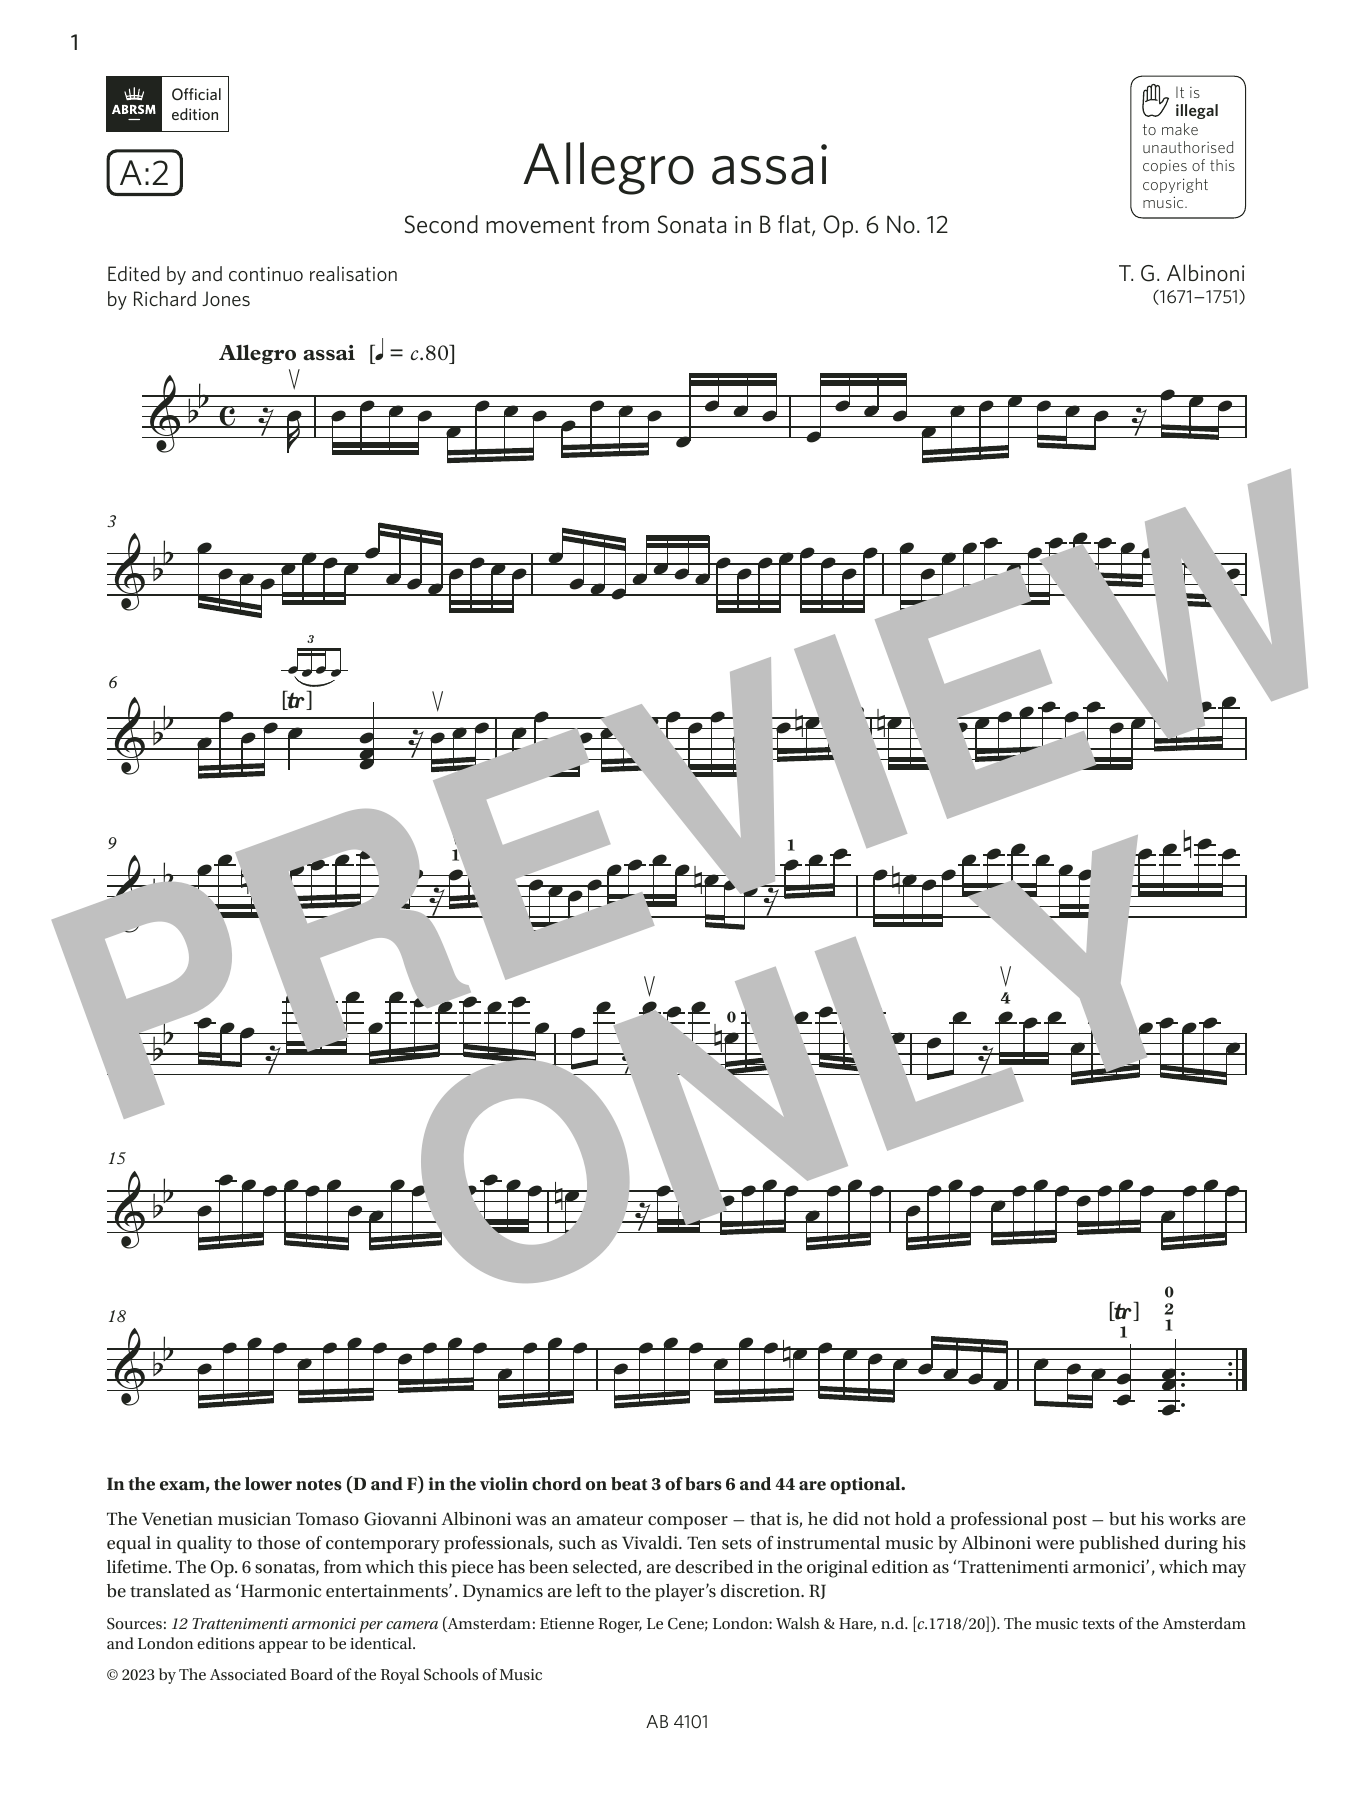 Download T. G. Albinoni Allegro assai (Grade 7, A2, from the AB Sheet Music